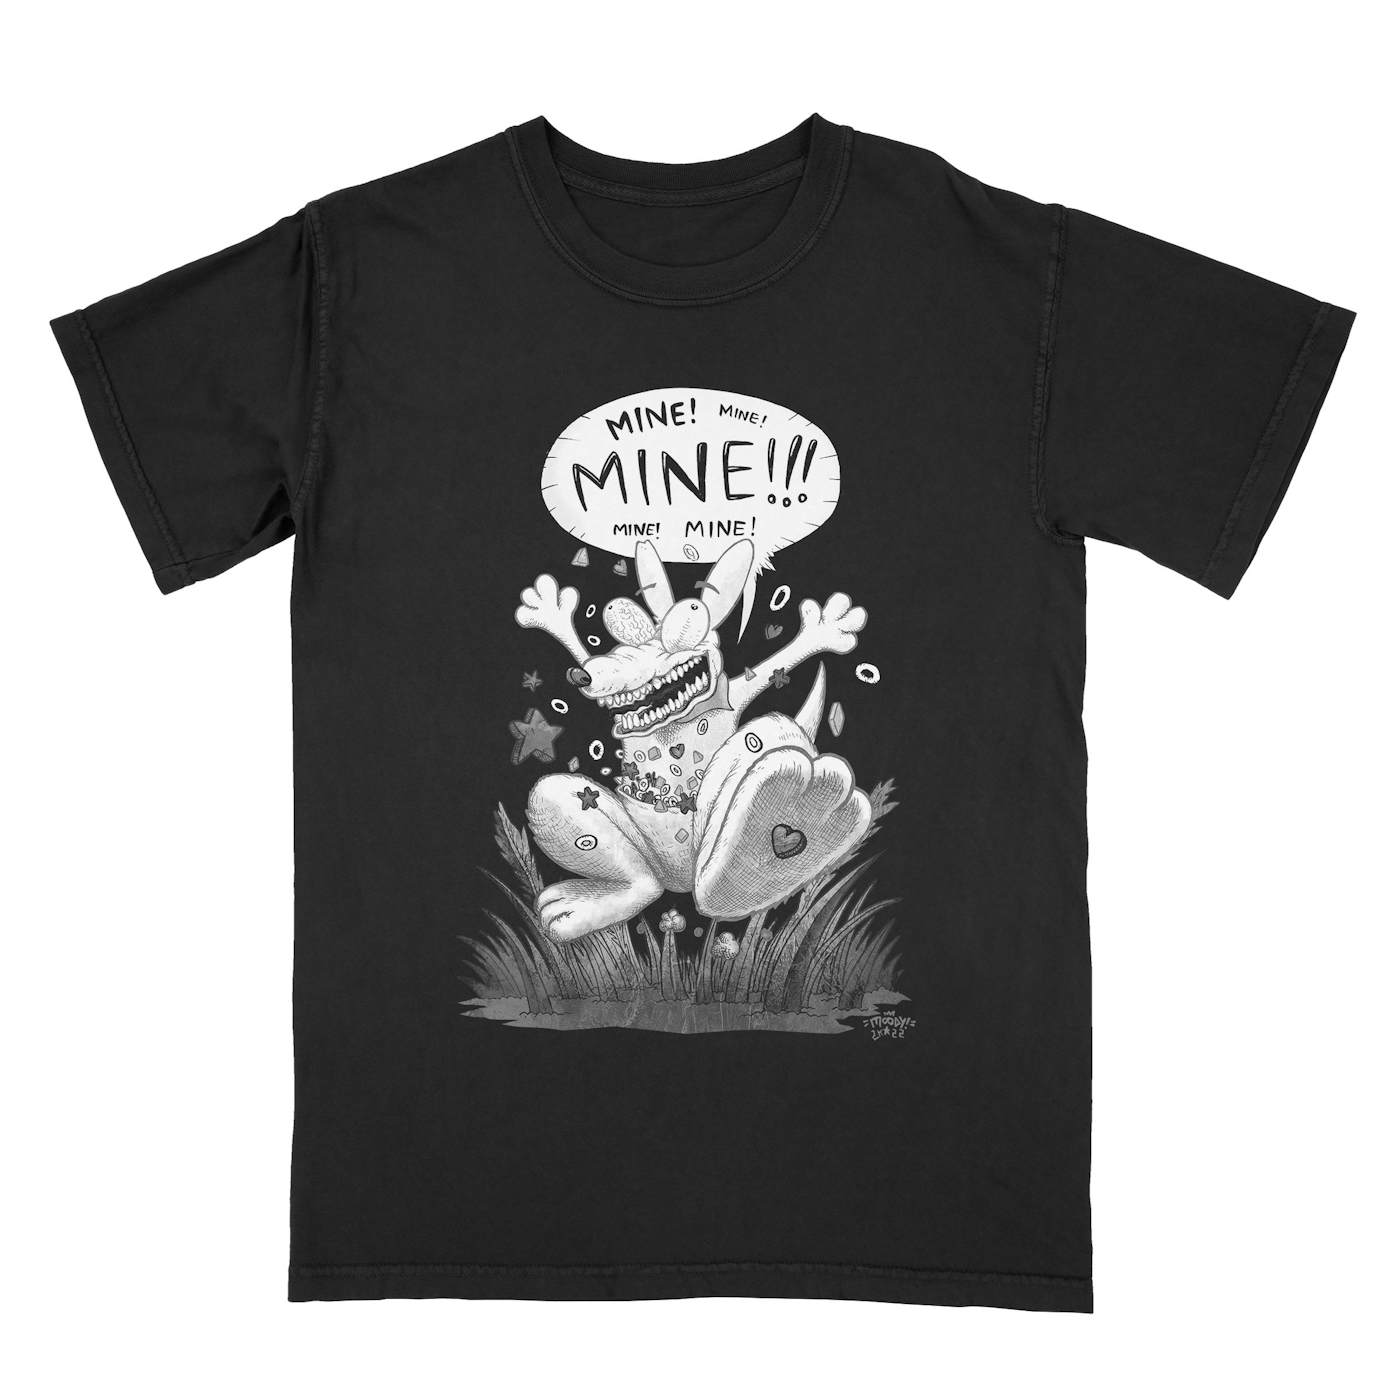  Vince Staples - T-Shirt - "Mine"